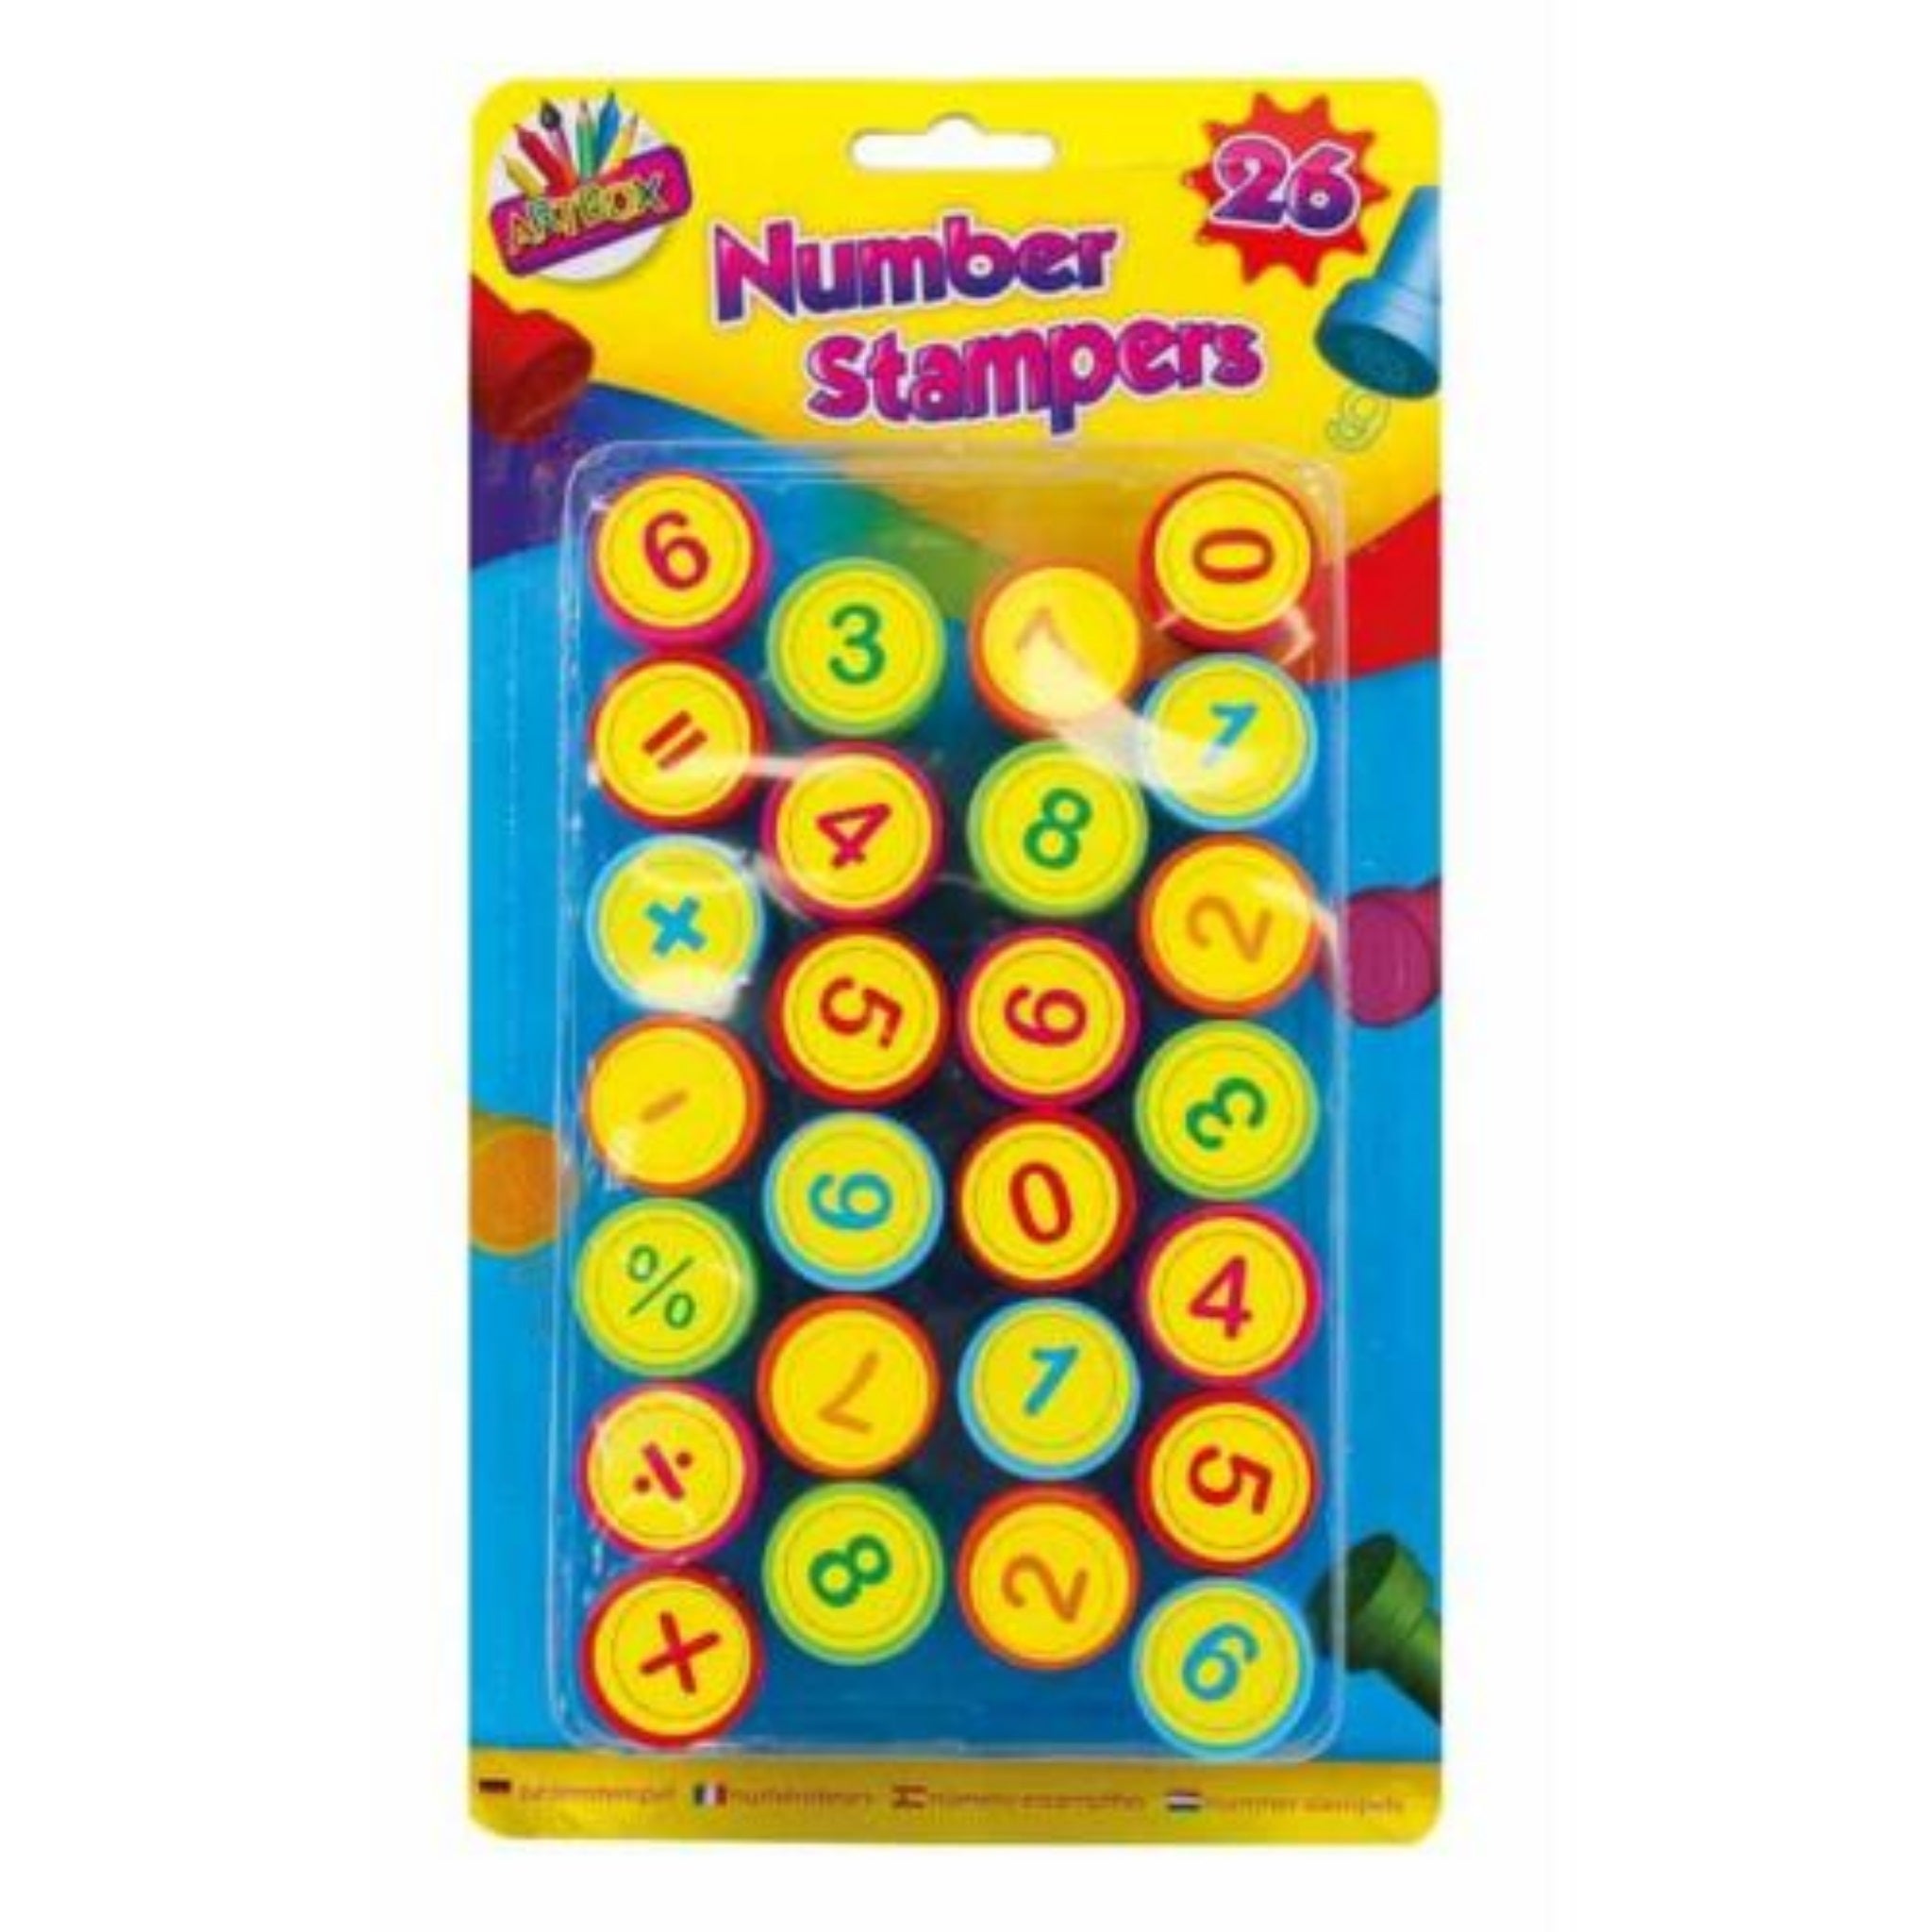 Beclen Harp Beclen Harp 26Pc Number Stampers Shape Assorted Stamps Set Kids Craft Self Ink Learning Colours